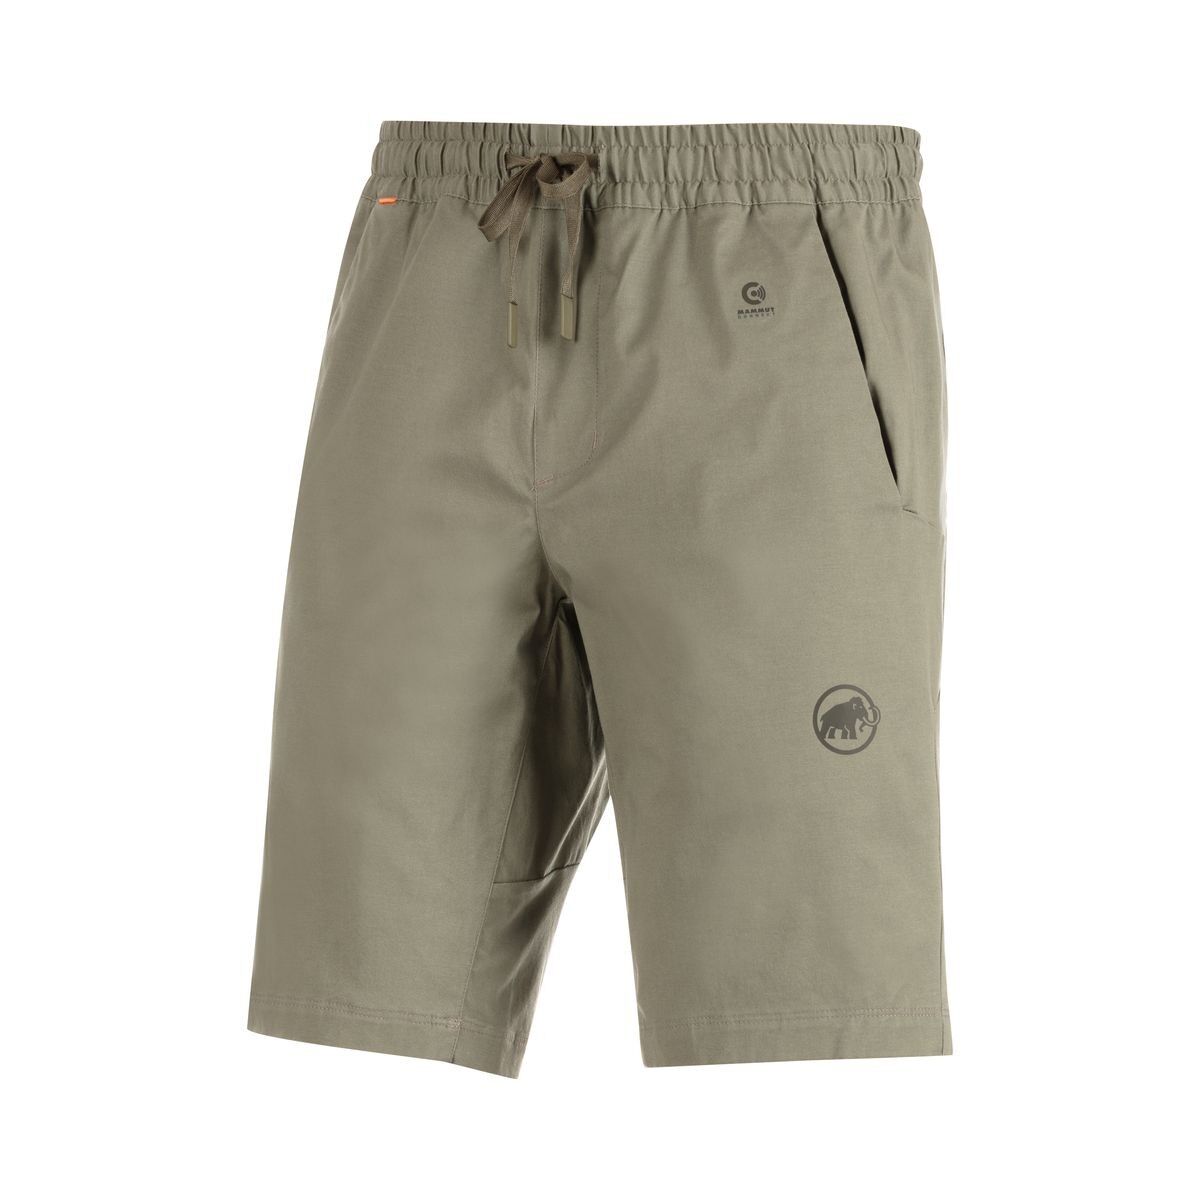 Mammut Camie Shorts - Climbing shorts - Men's